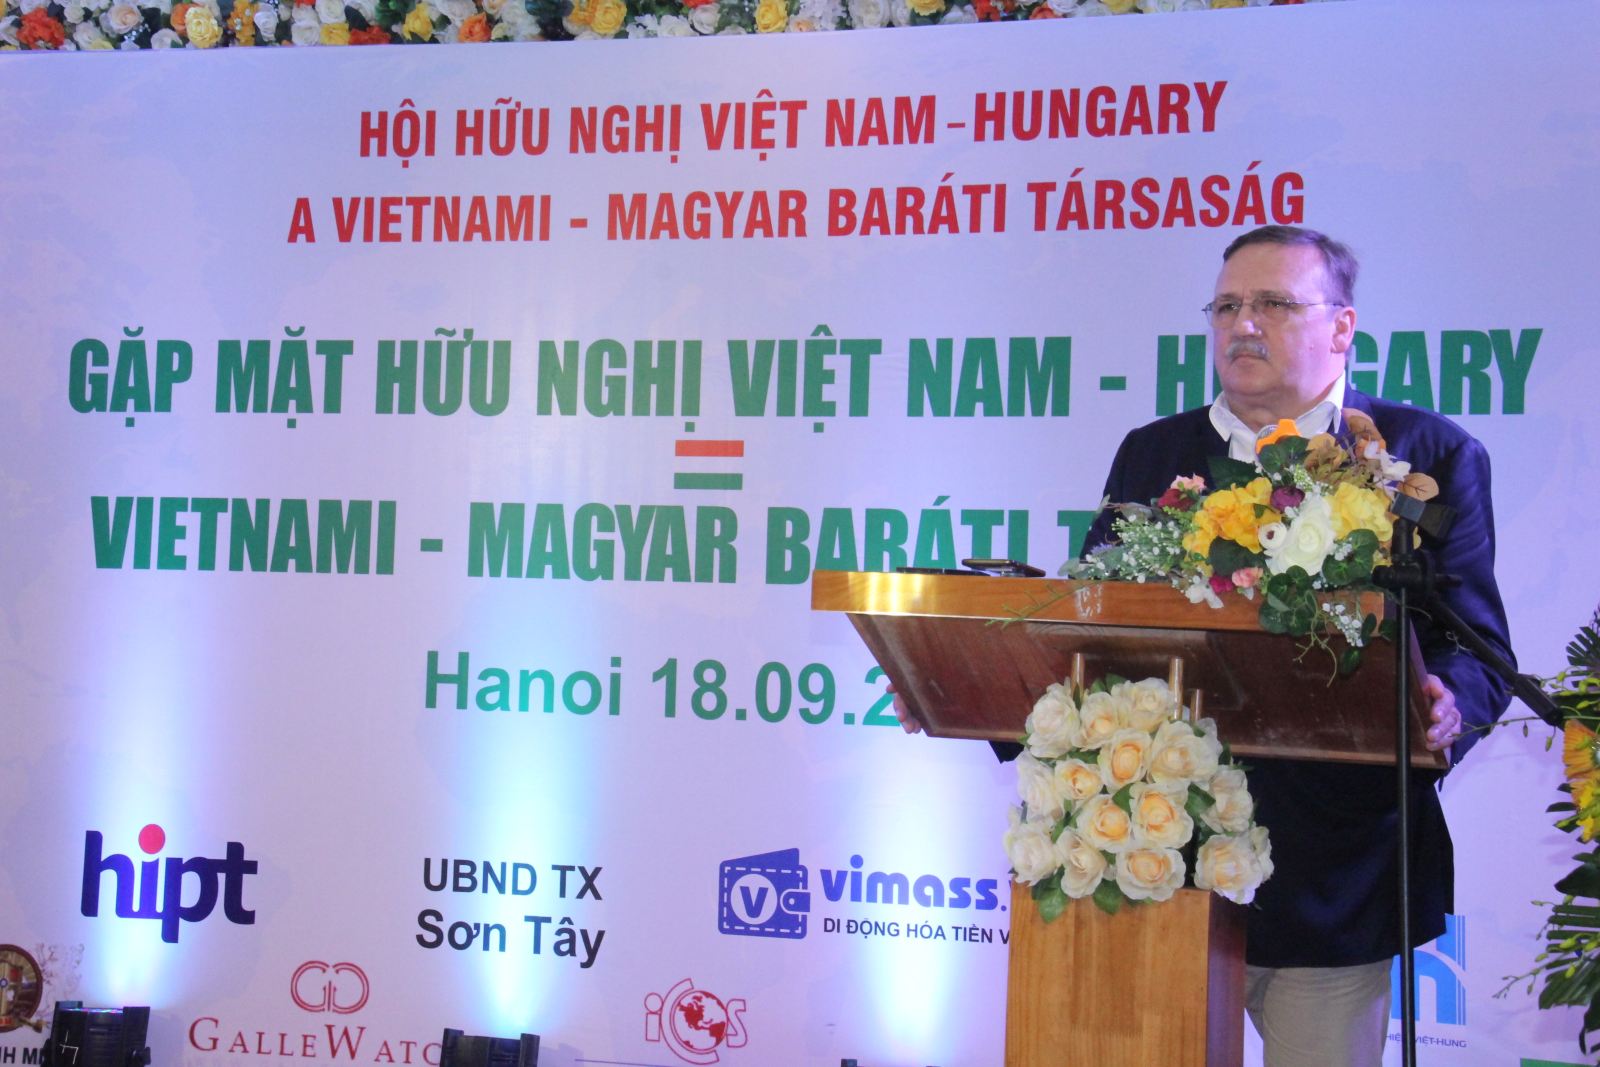 Friendship Exchange celebrates National Days of Viet Nam and Hungary